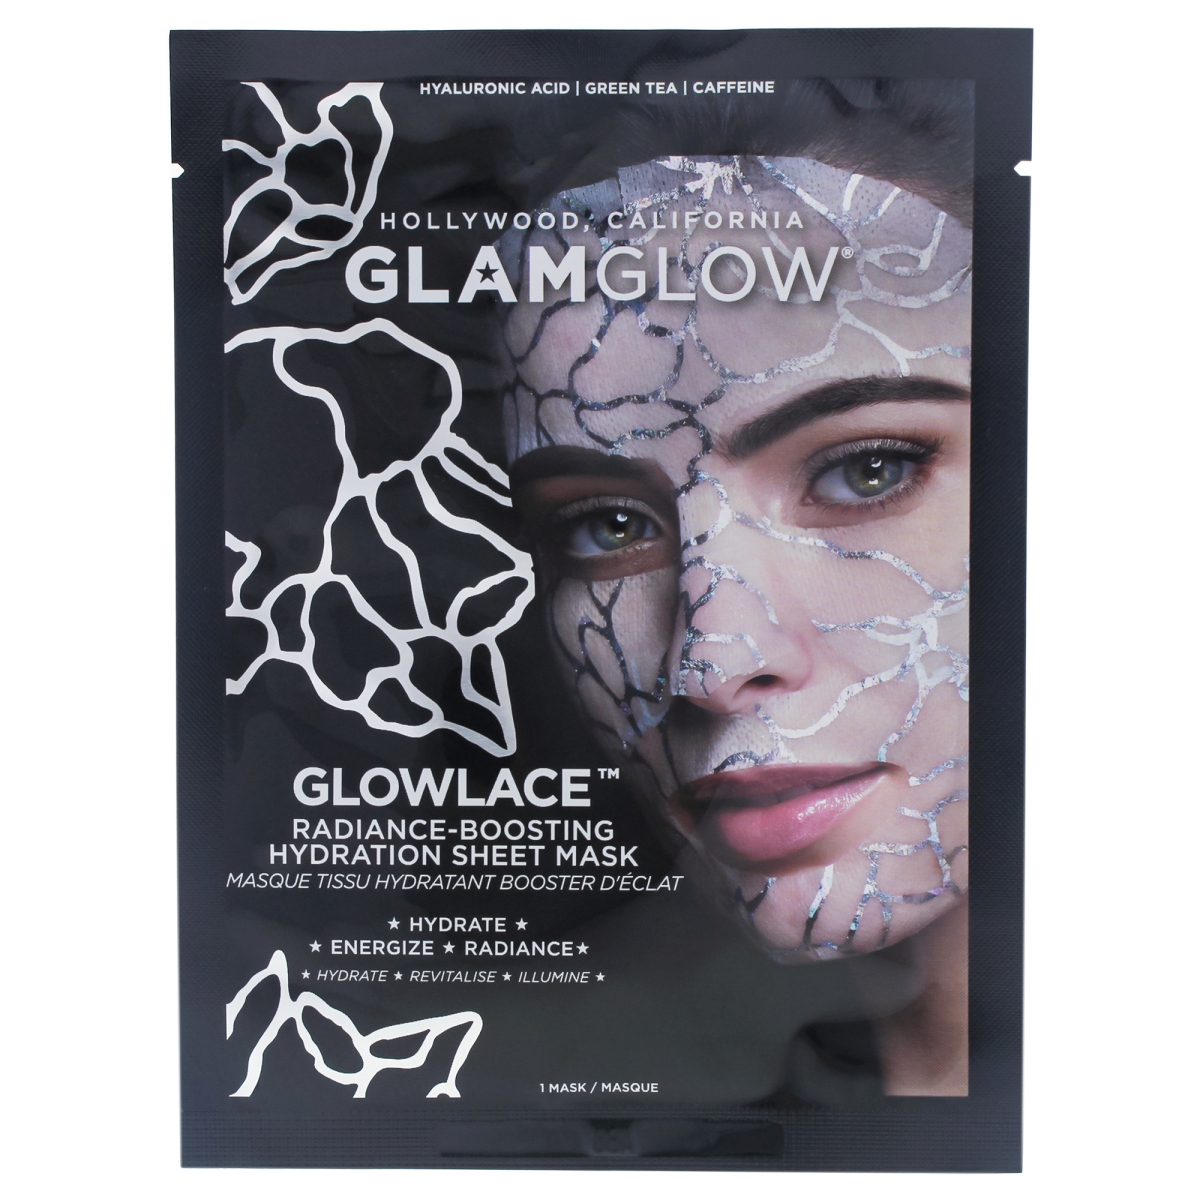 I0091881 Glowlace Radiance-boosting Hydration Sheet Mask For Women